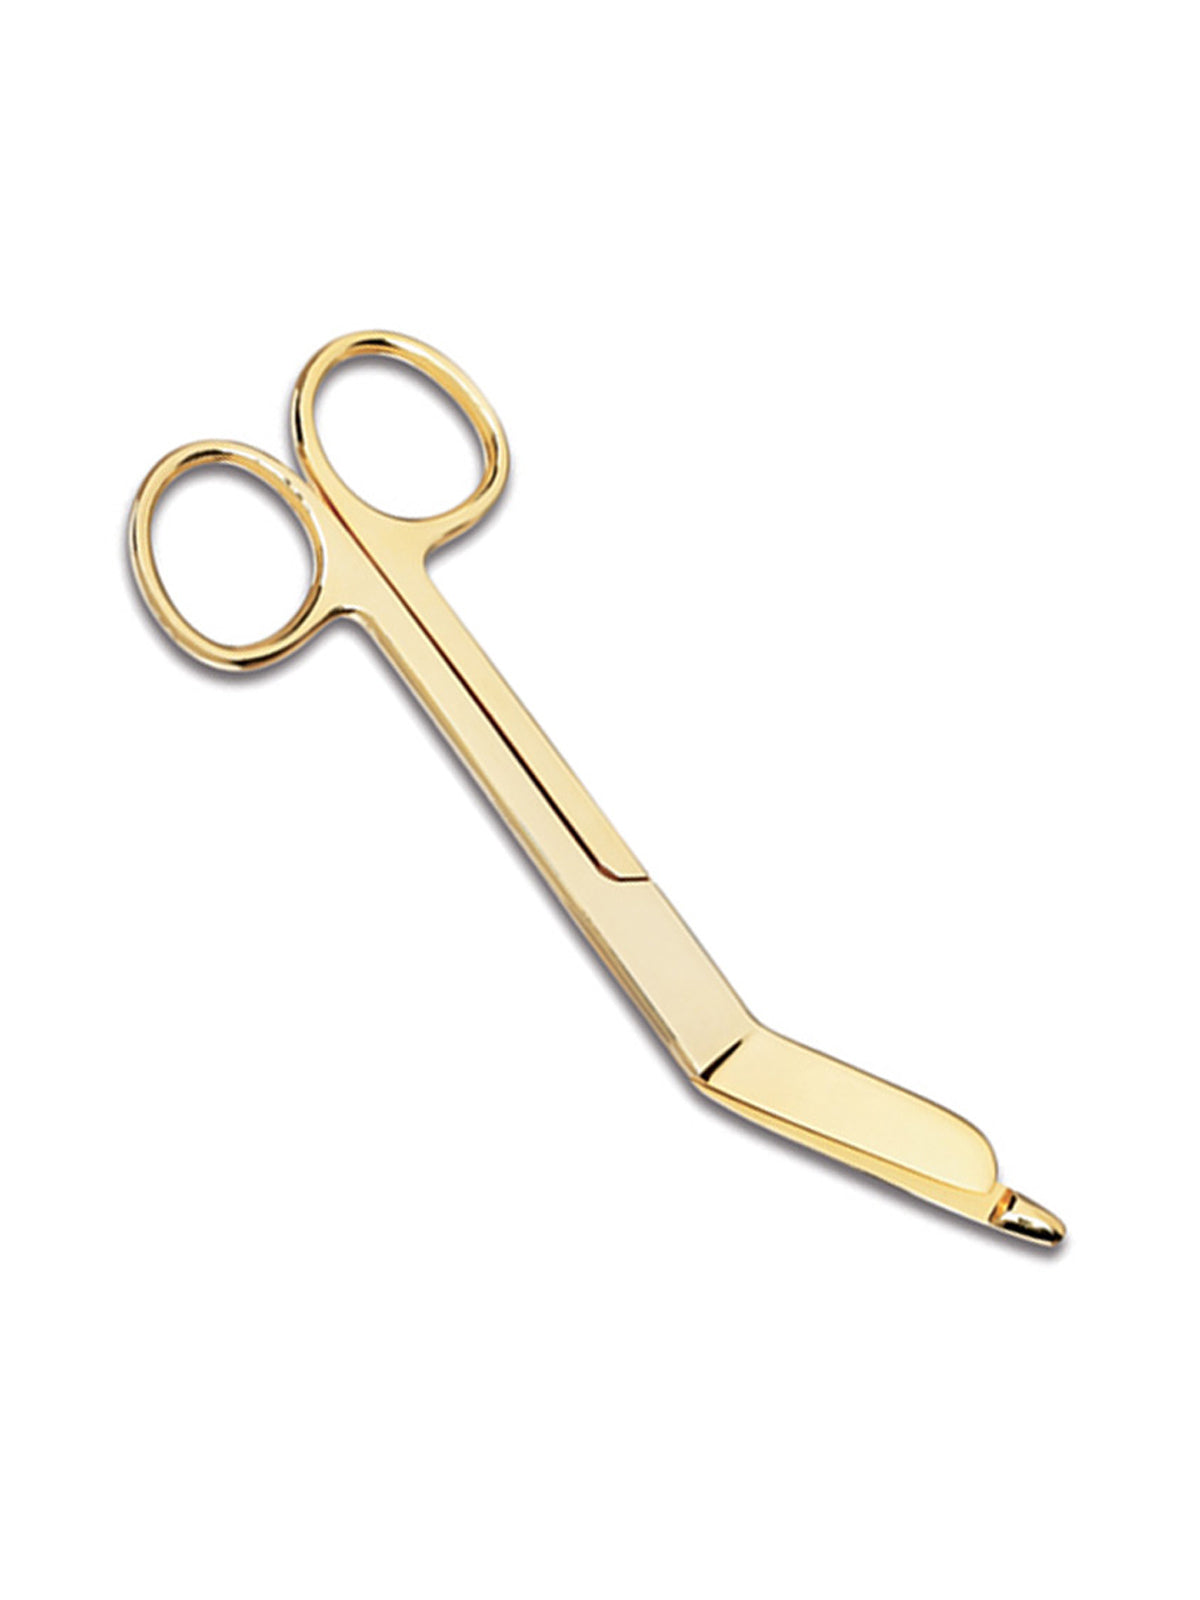 Gold Plated Bandage Scissor Scissors - 152 - Standard